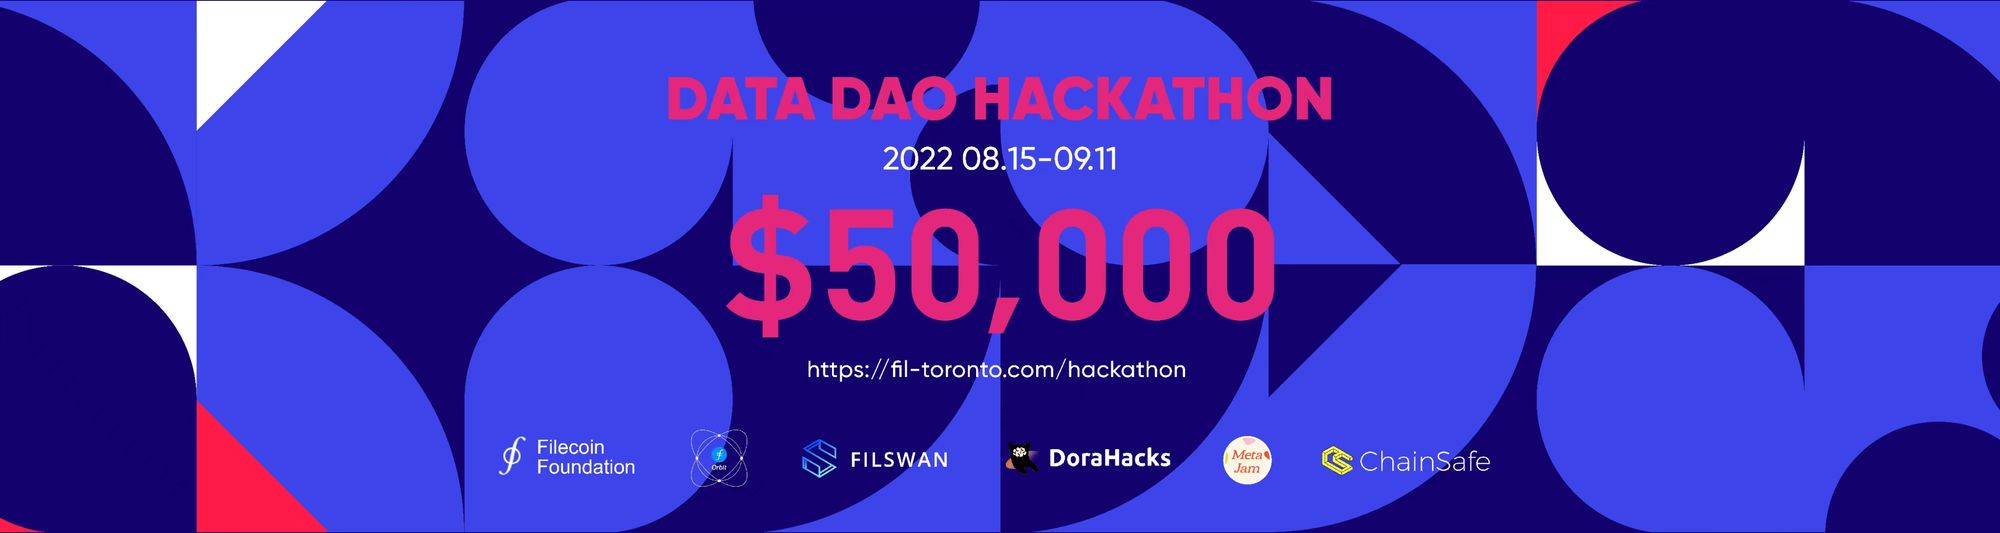 Data DAO Hackathon Application Guide